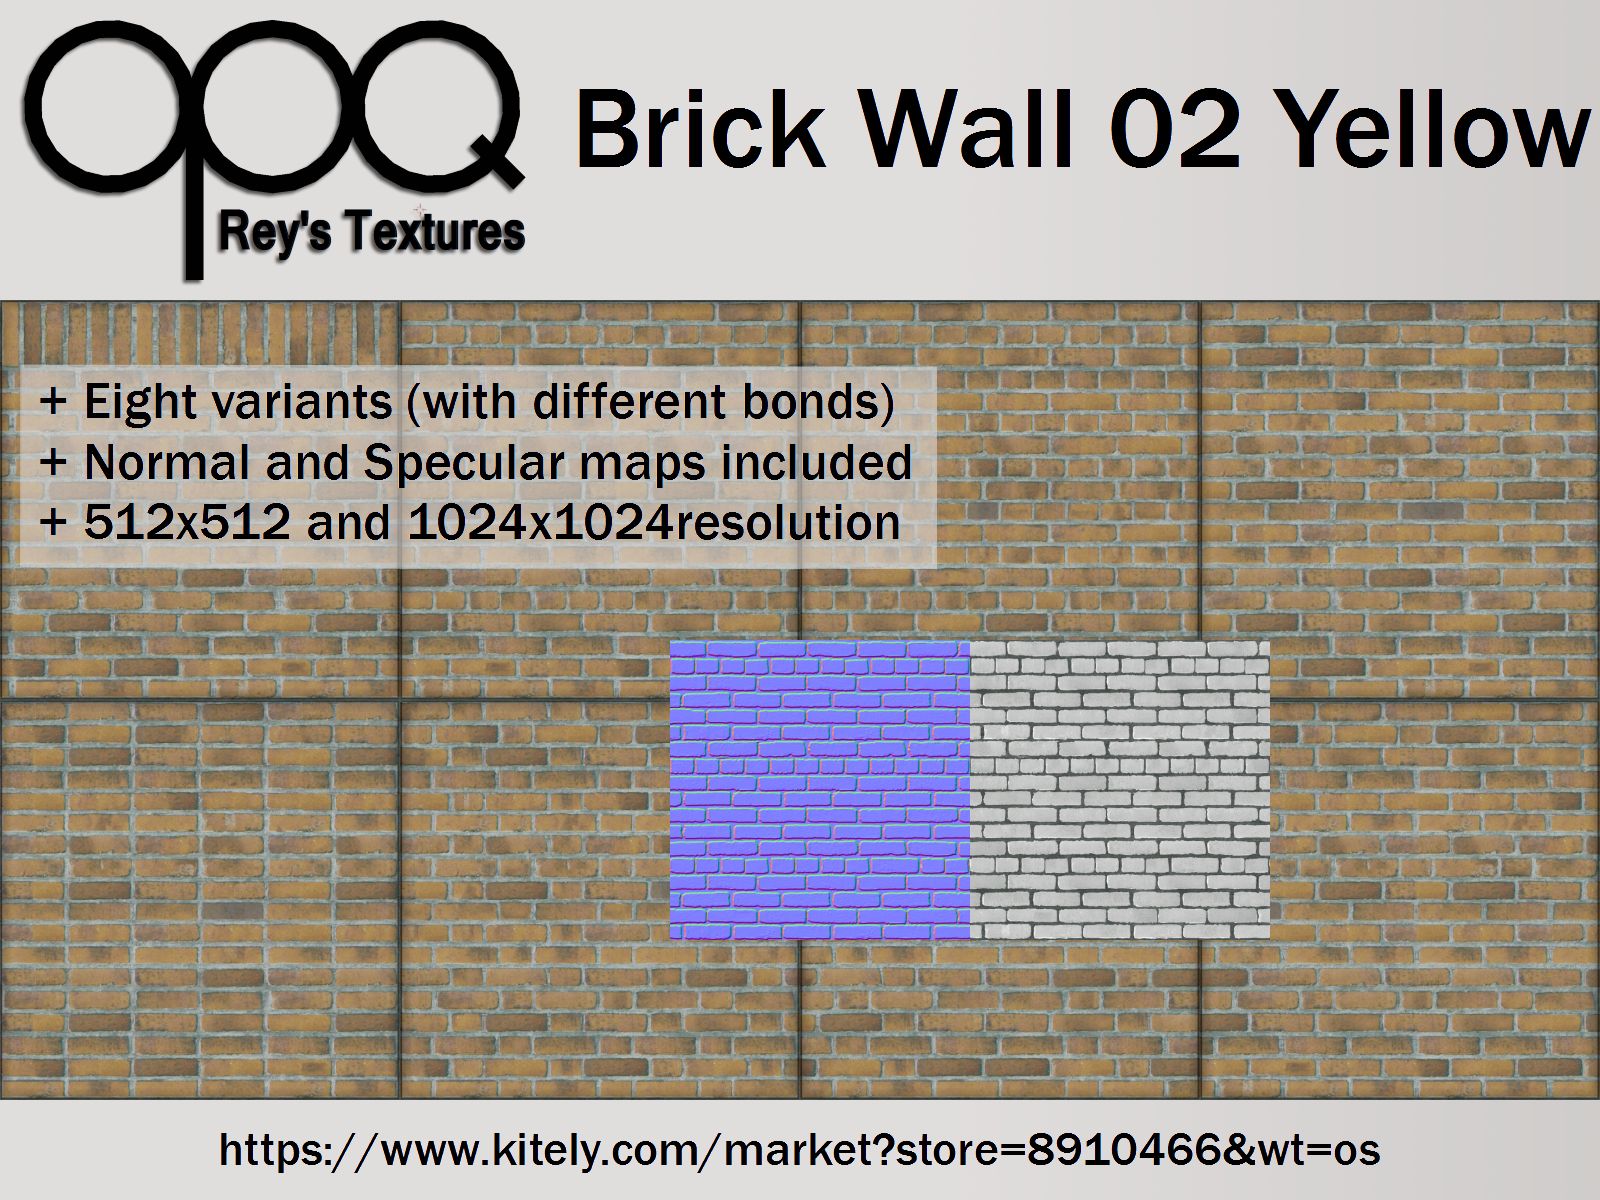 Rey's Brick Wall 02 Yellow Poster Kitely.jpg